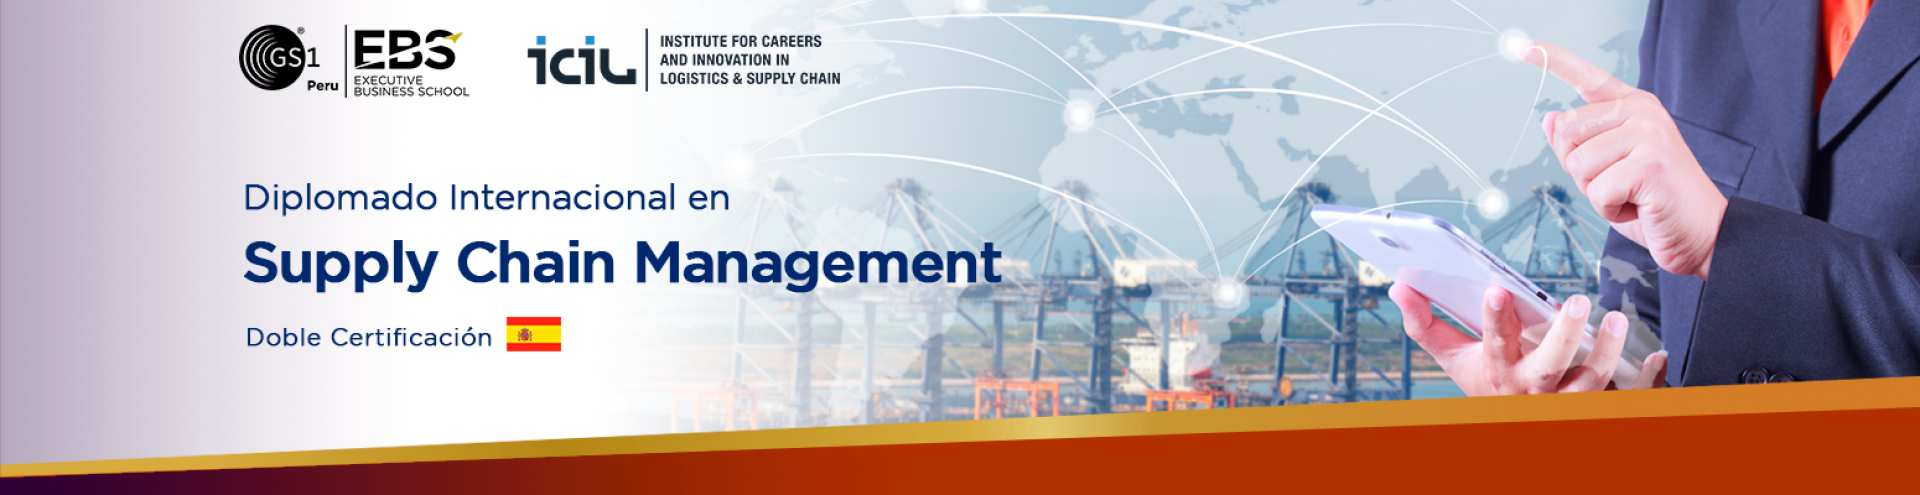 Diplomado Internacional Supply Chain Management